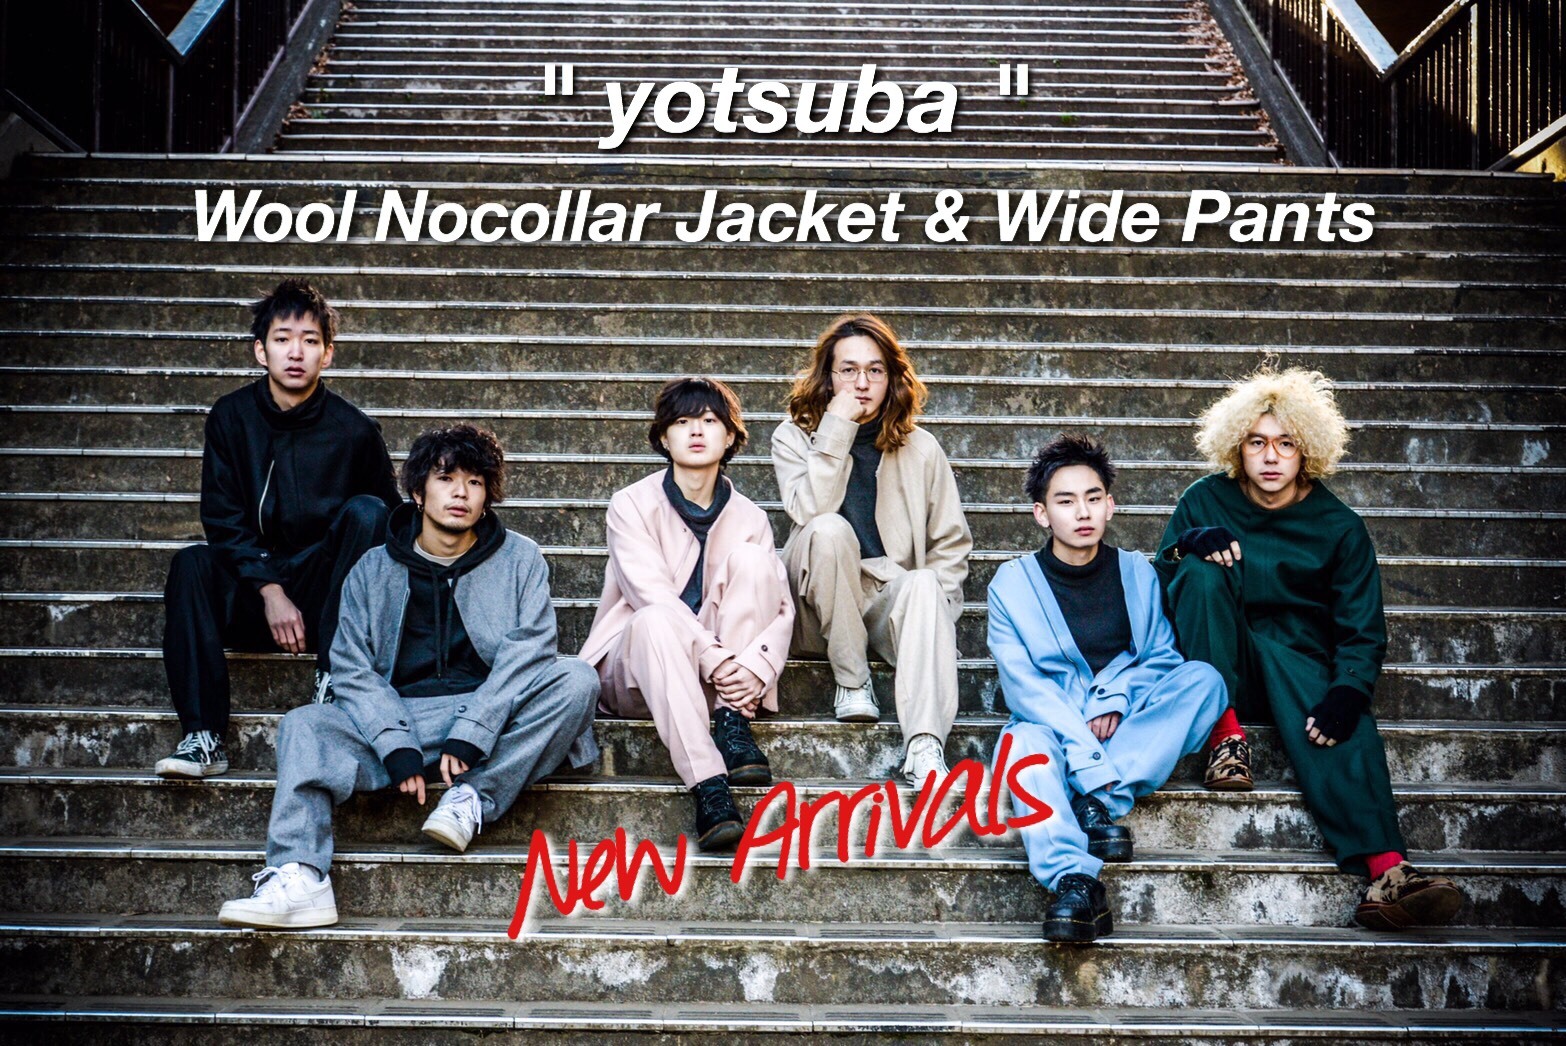 yotsuba - Wool Nocollar jacket & Wide Pants | kodona's Ownd